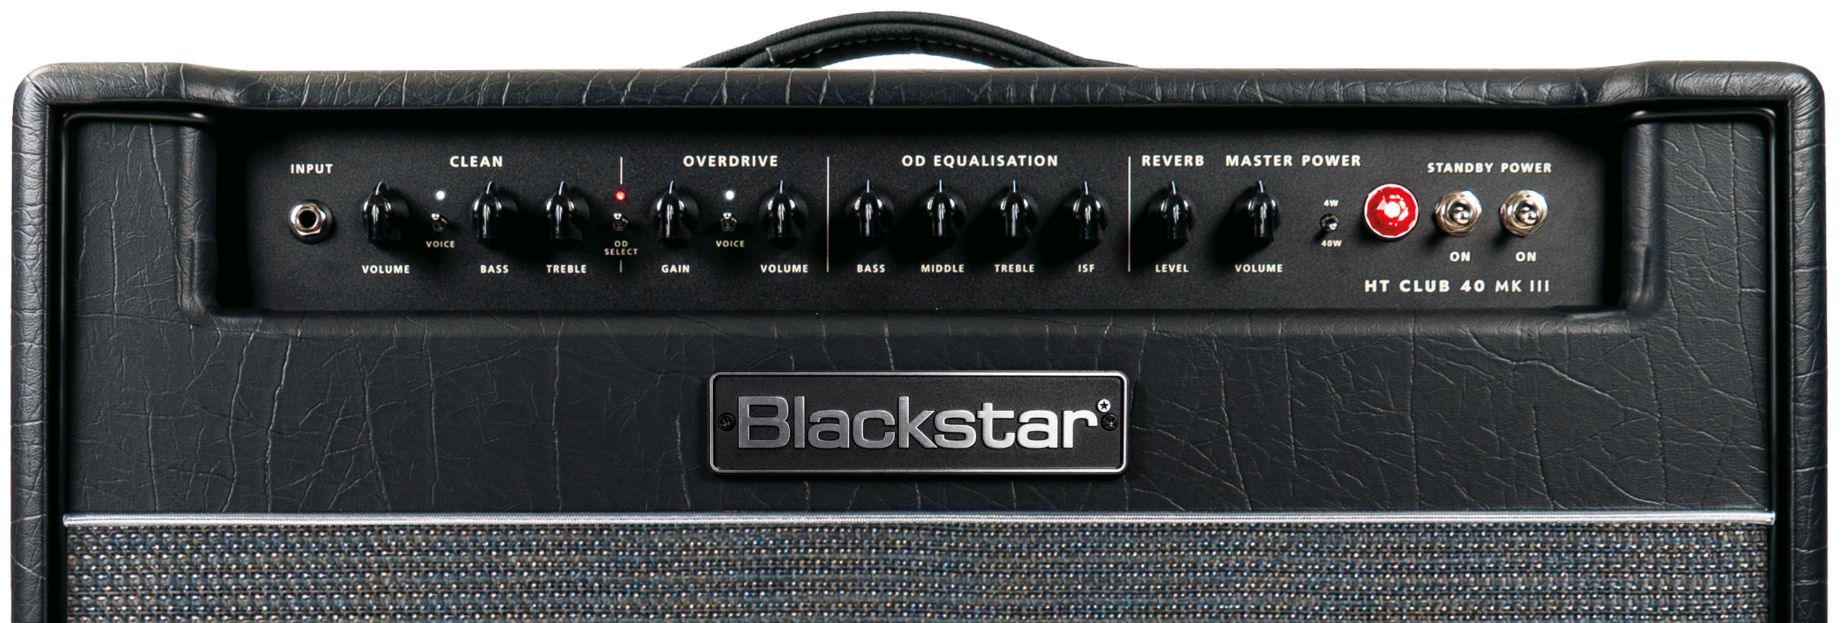 Blackstar Ht Venue Club 40 112 Mkiii 40w 1x12 El34 - Combo für E-Gitarre - Variation 3